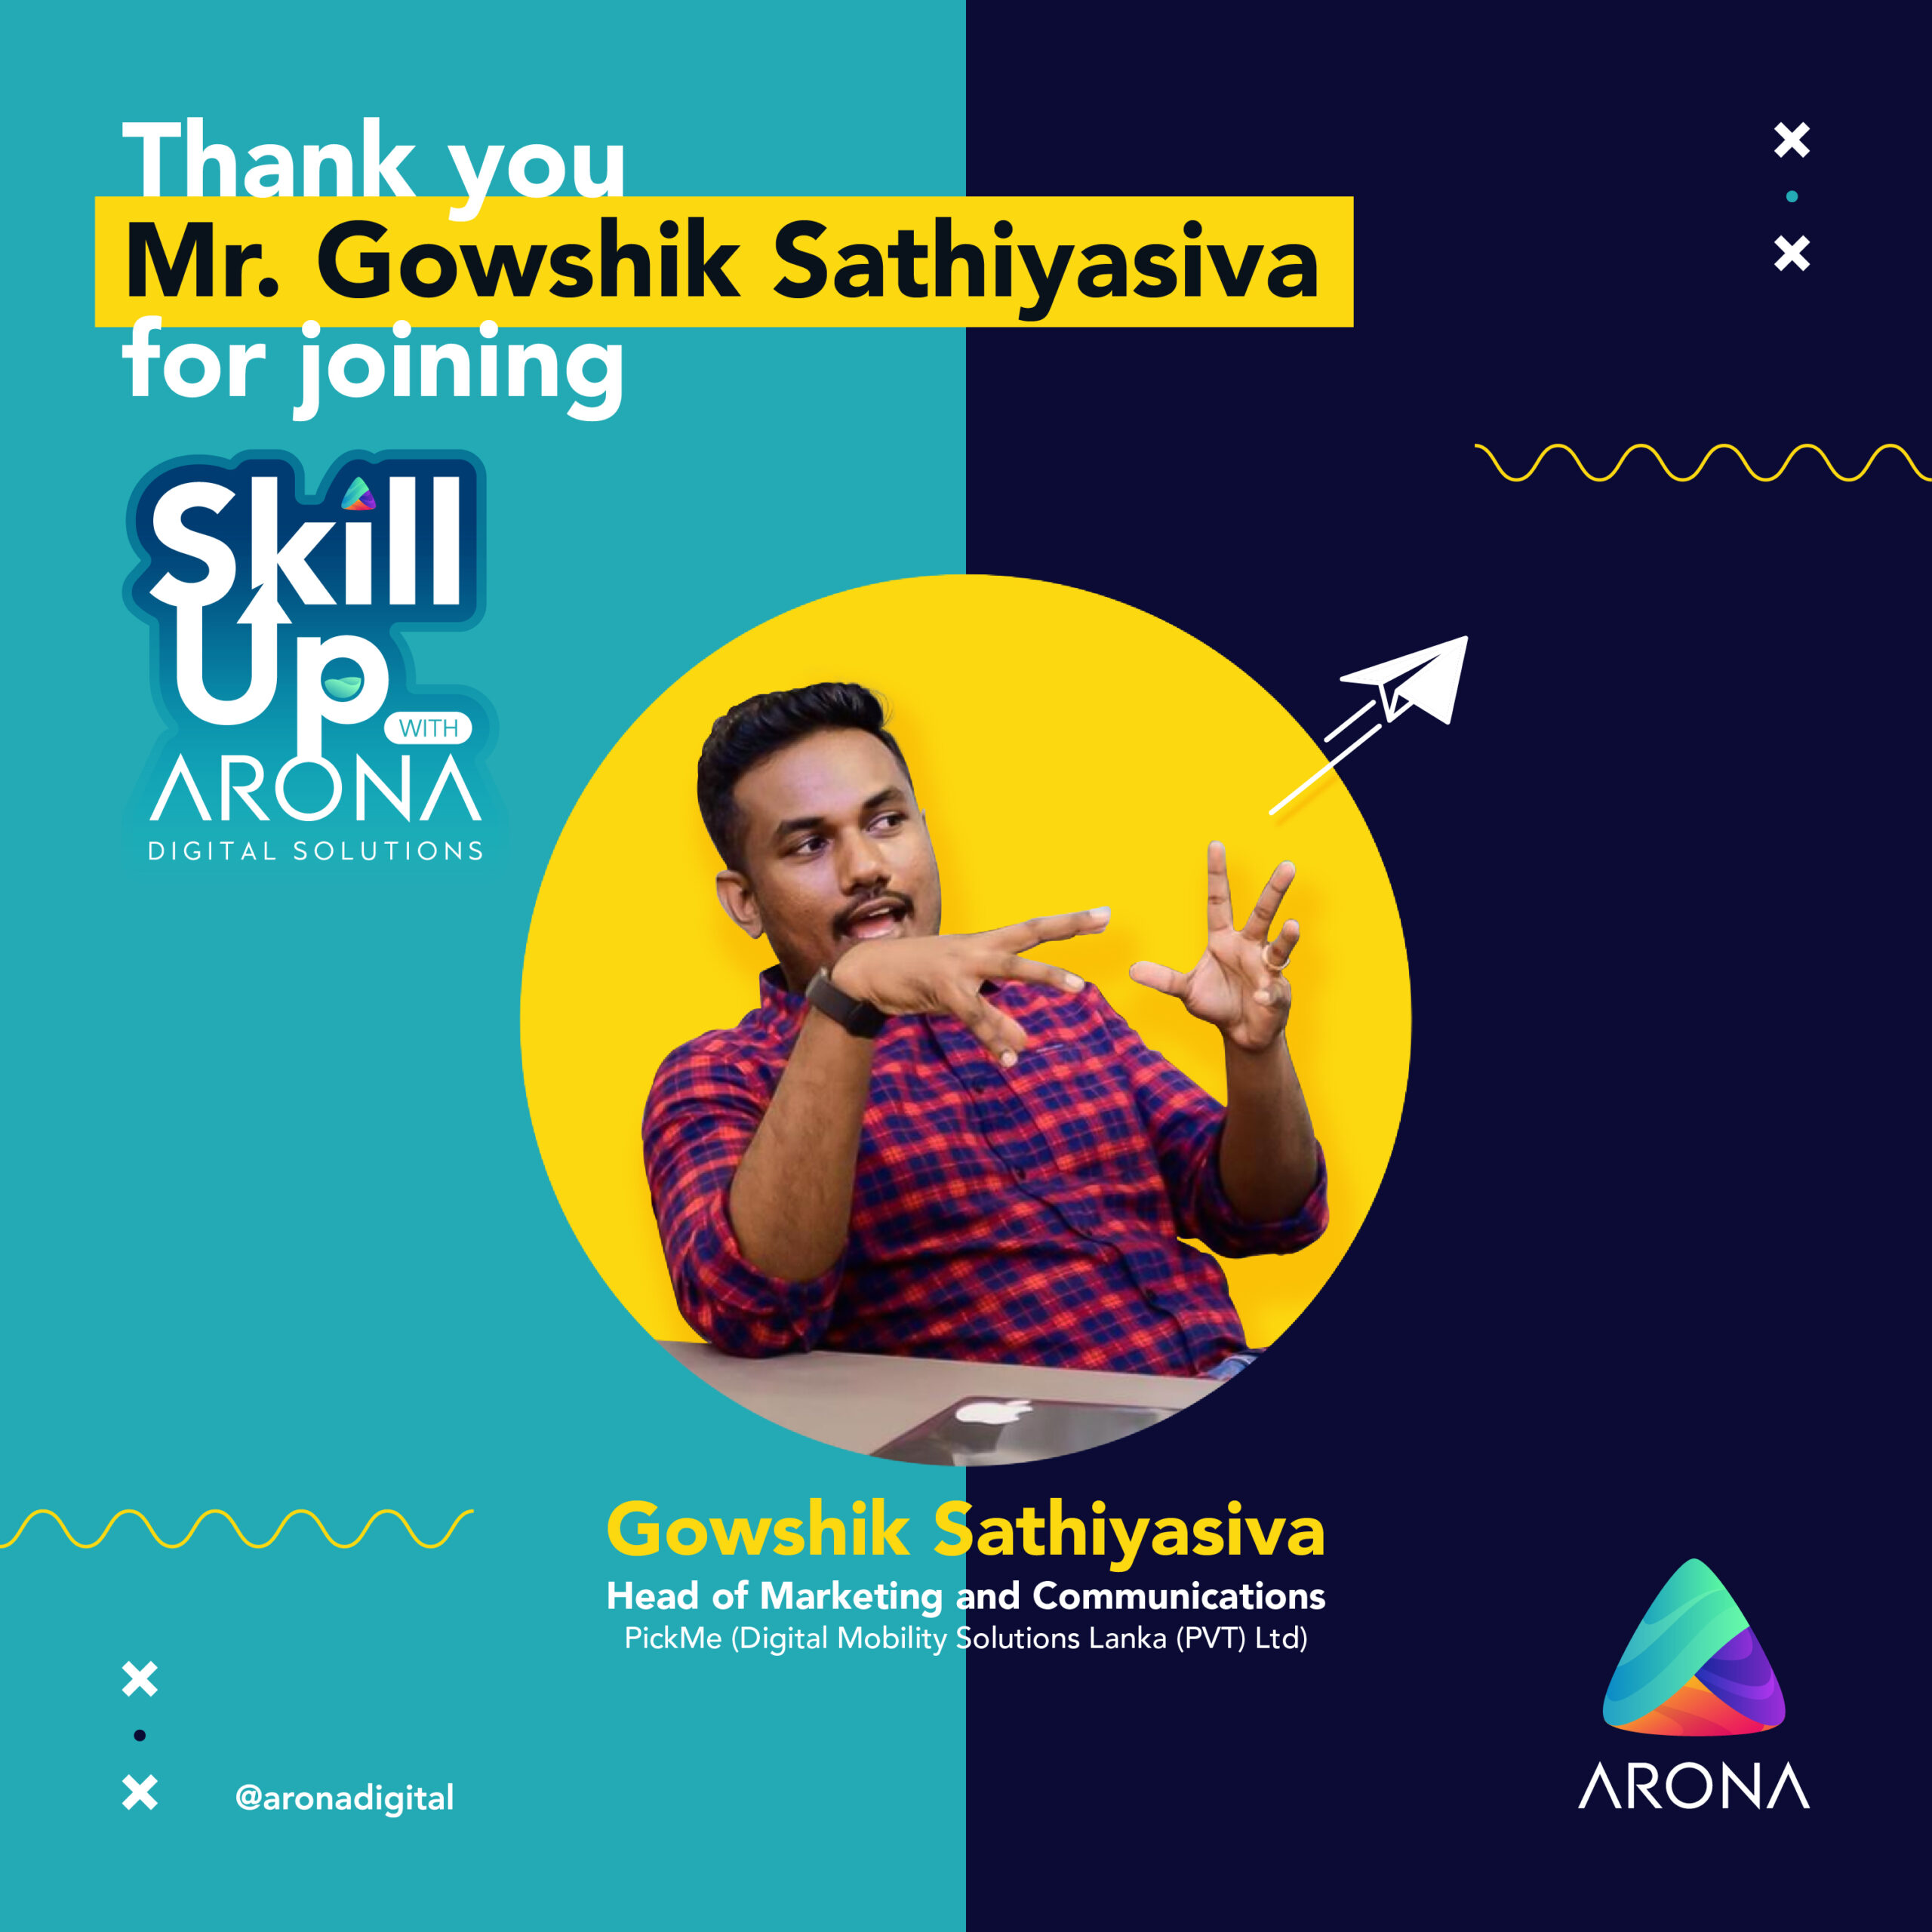 Gowshik Sathiyasiva from PickMe joined Skillup with Arona Digital